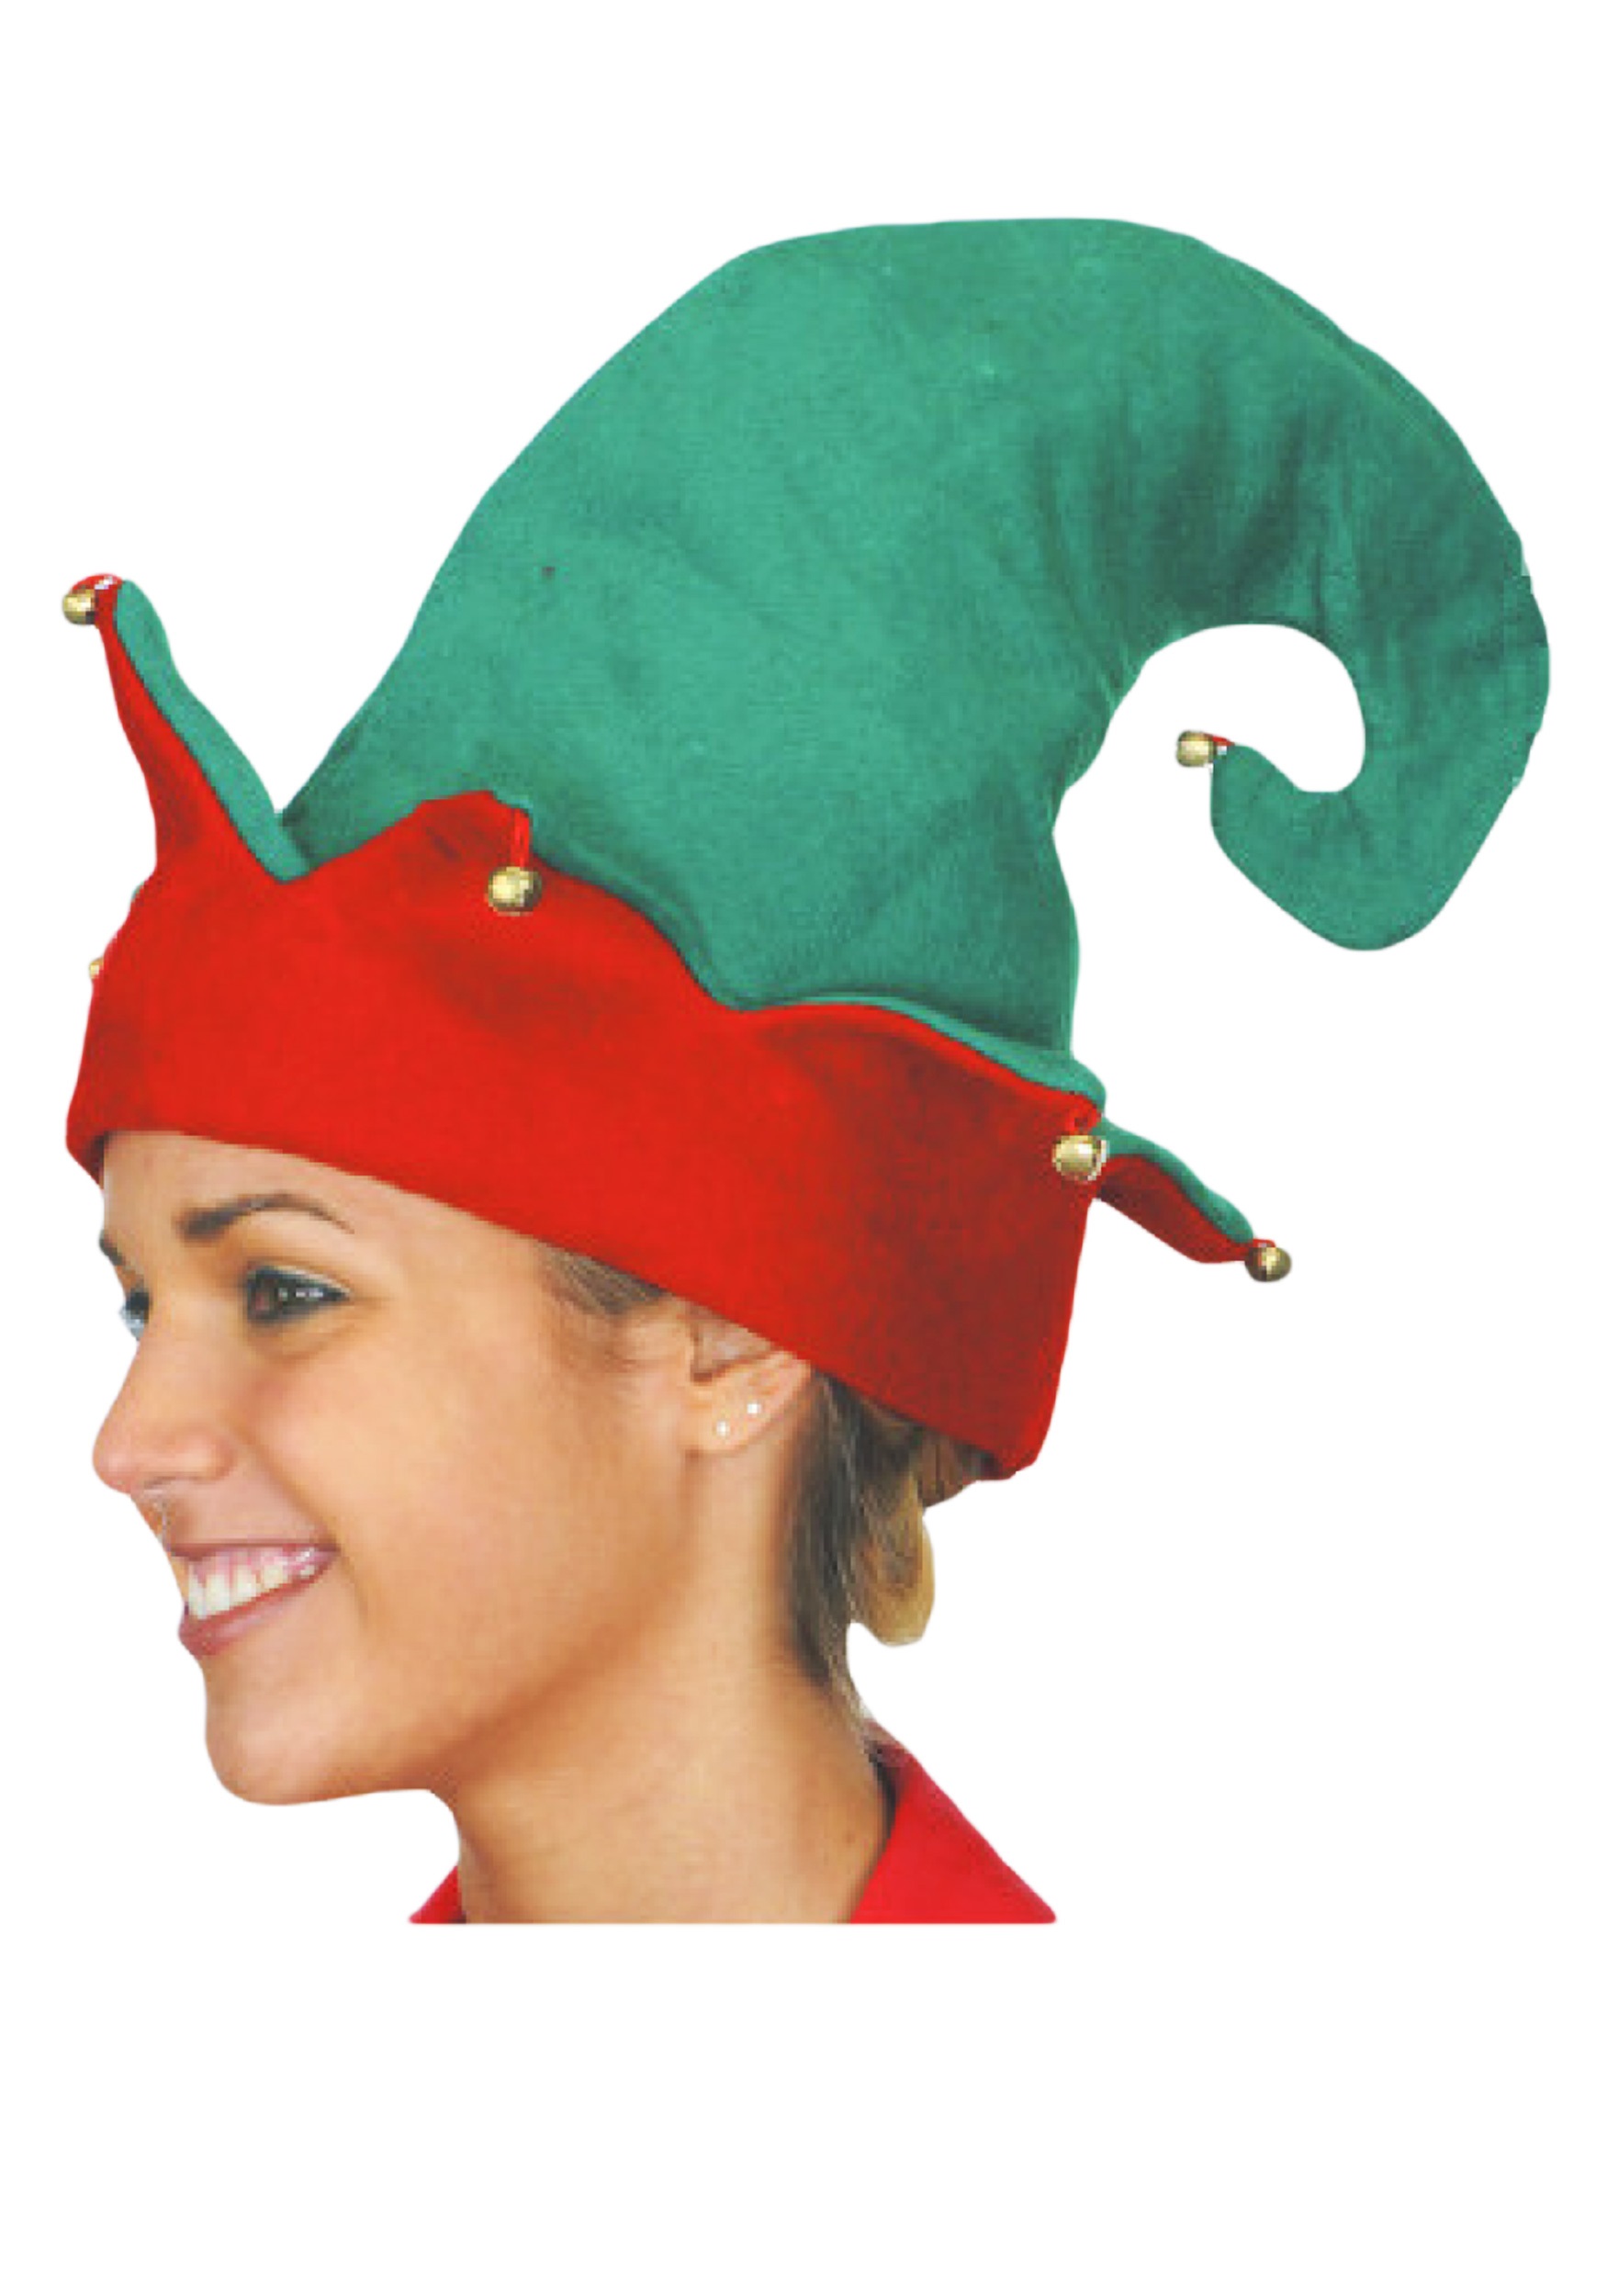 North Pole Elf Costume Hat